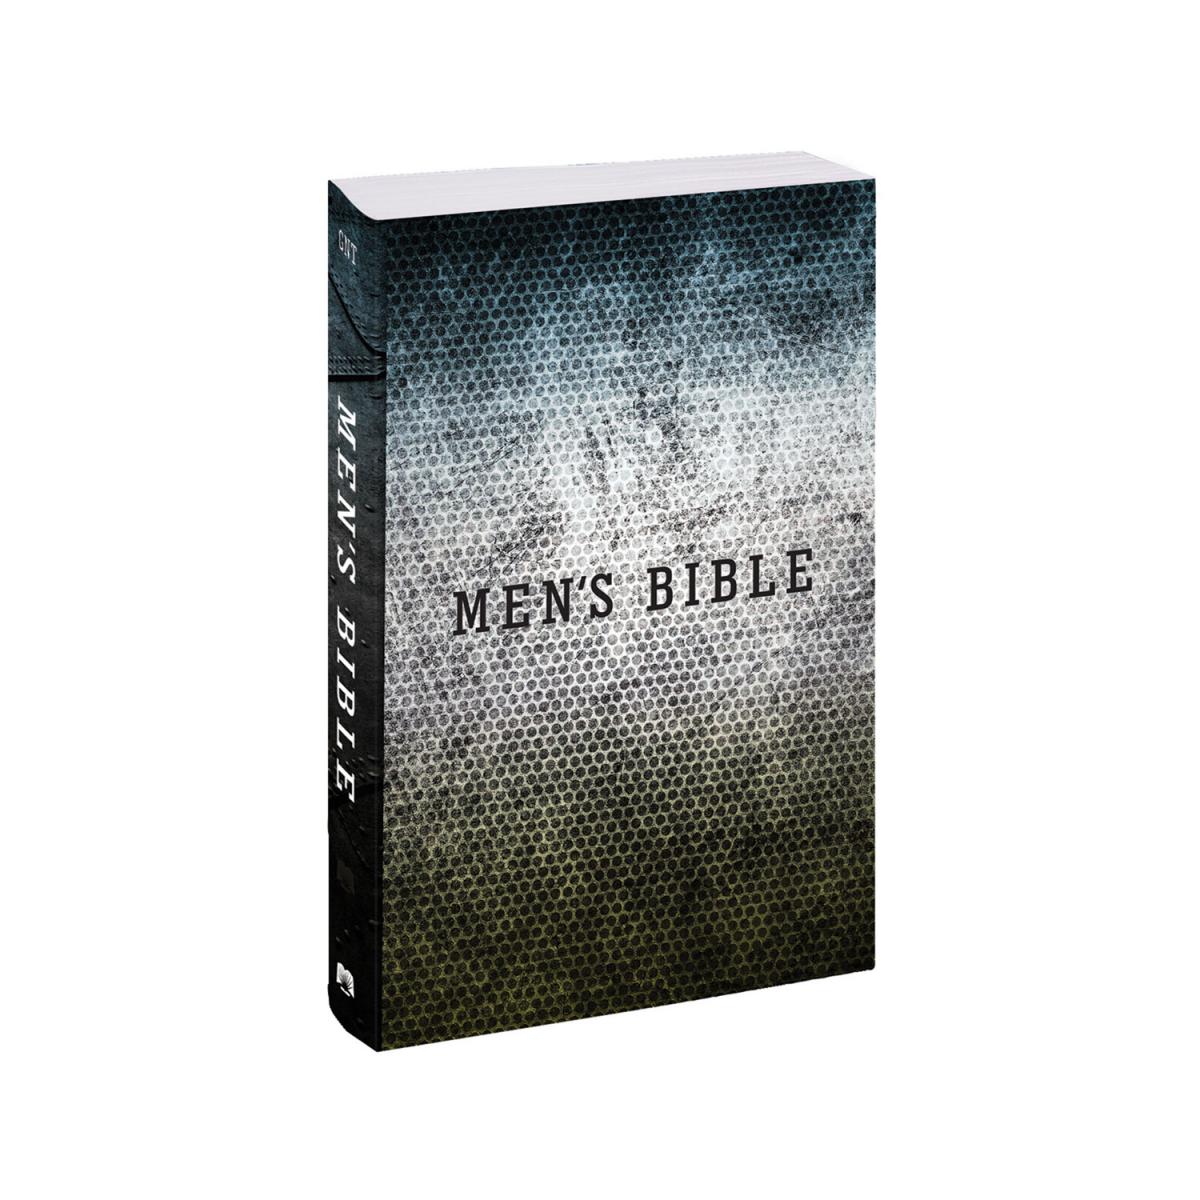 The Men's Bible (GNT)